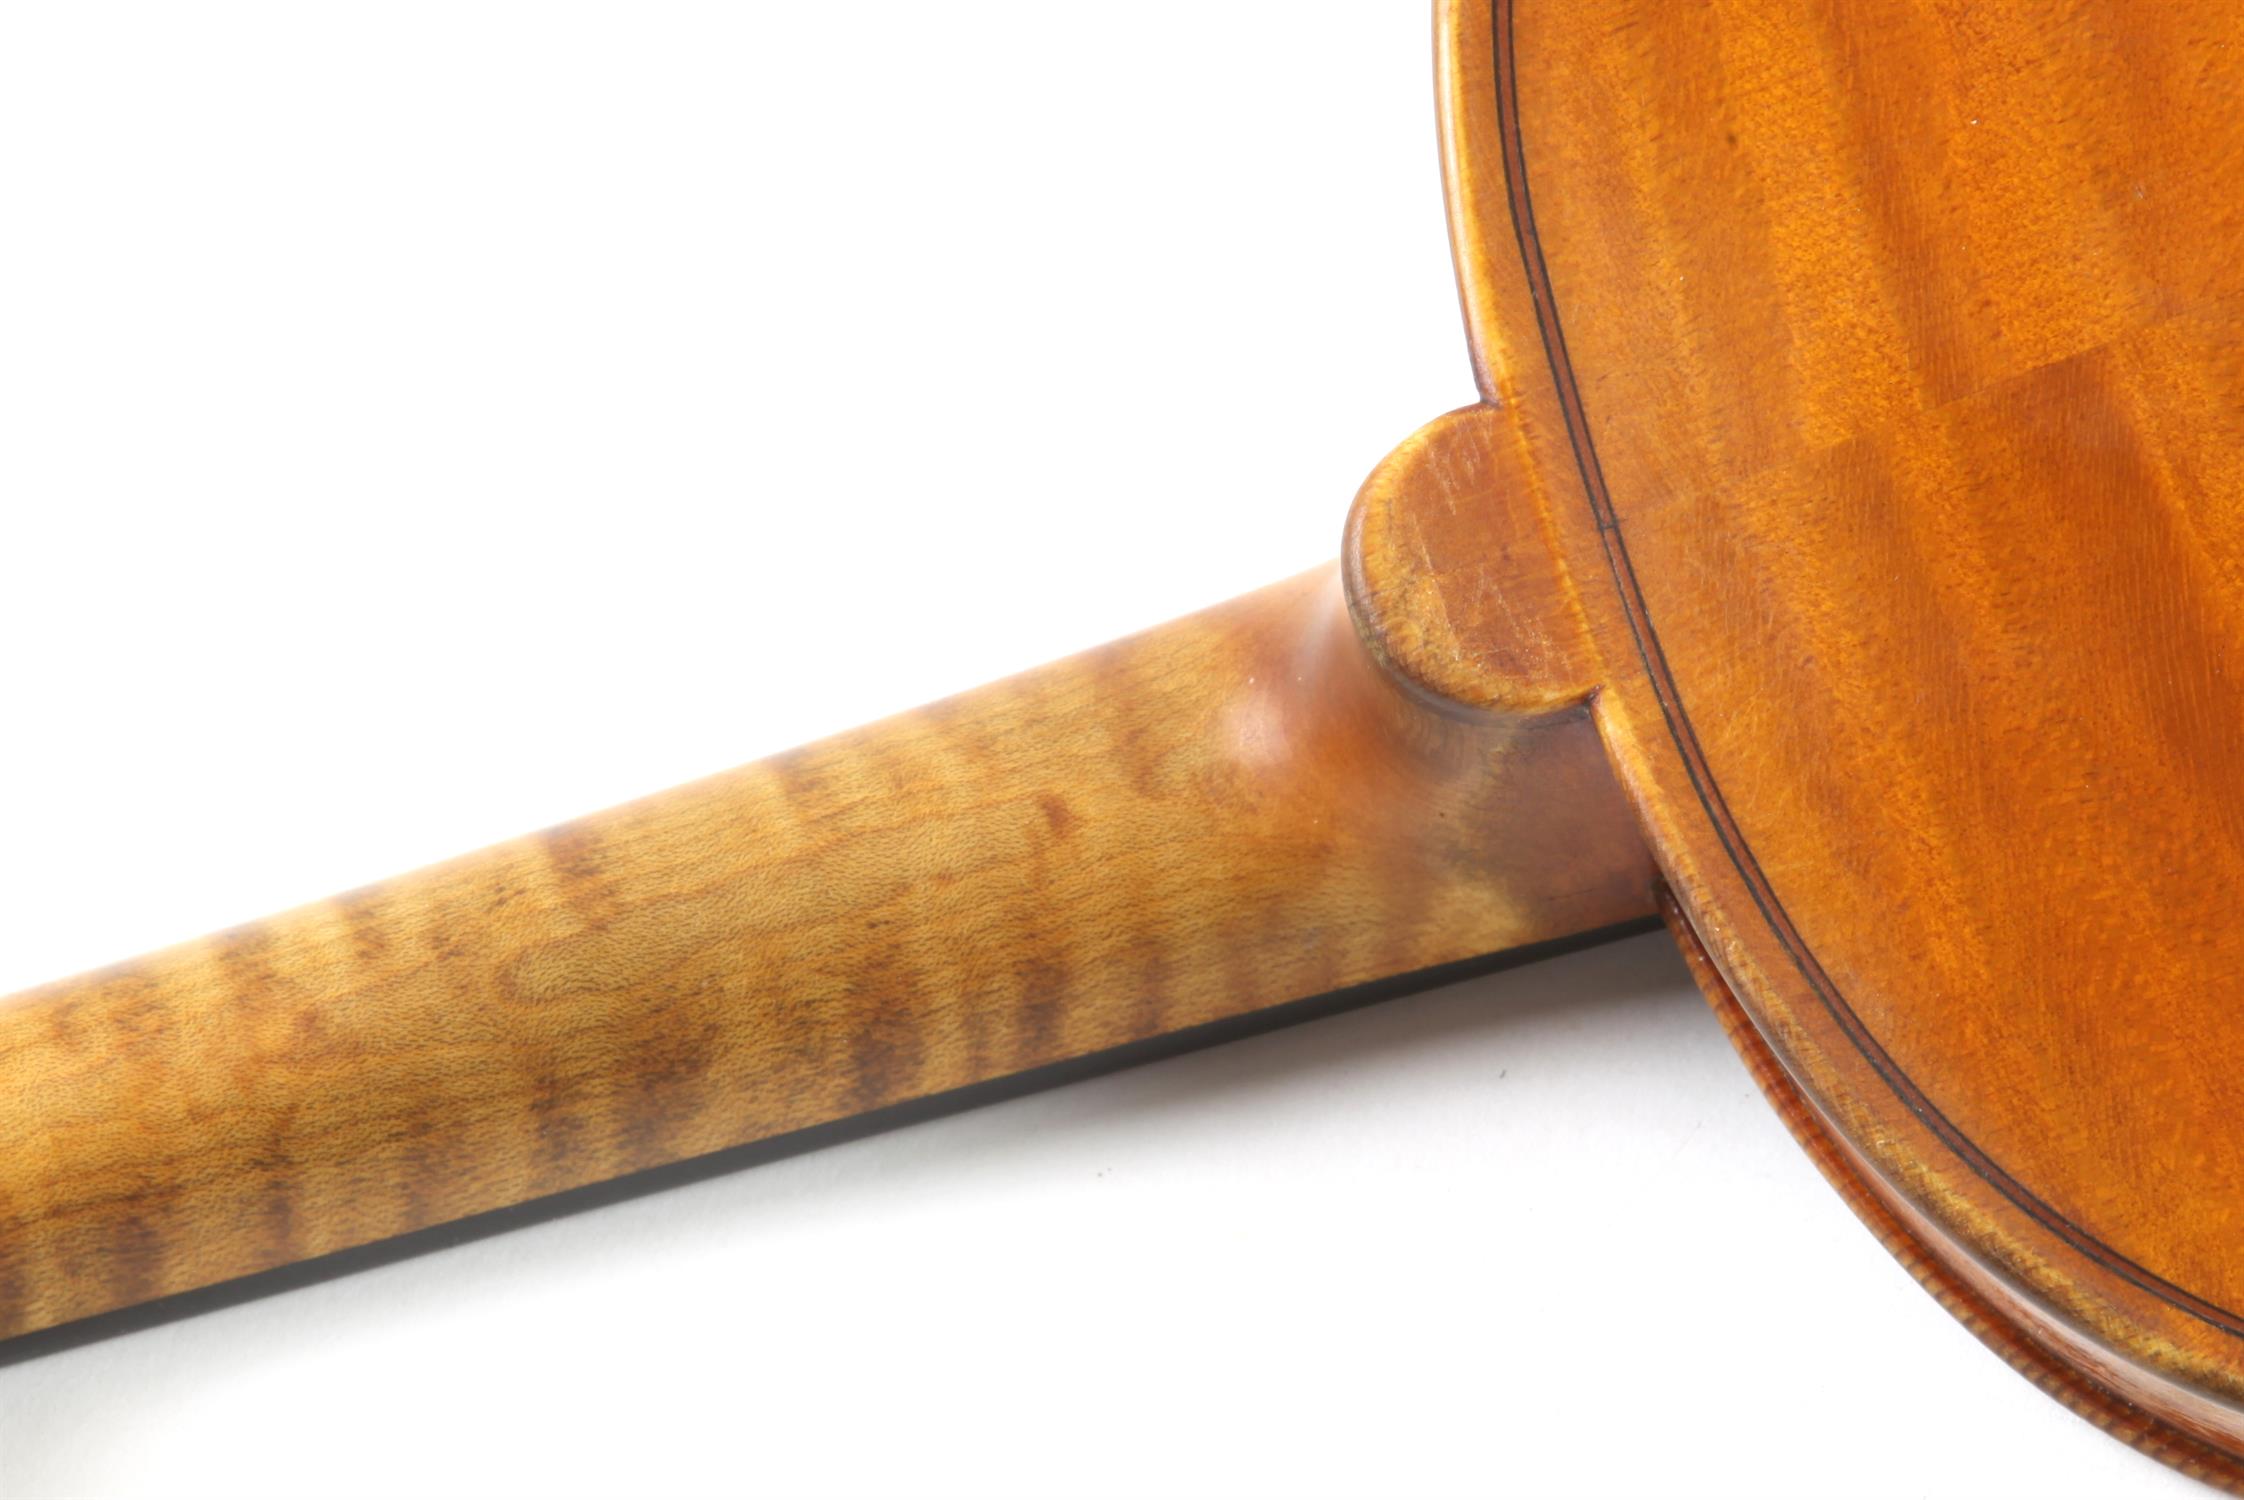 Carlo Giuseppe Oddone. A violin after Stradivari. Labelled Carlo Giuseppe Oddone fece. Torino A. - Image 16 of 39